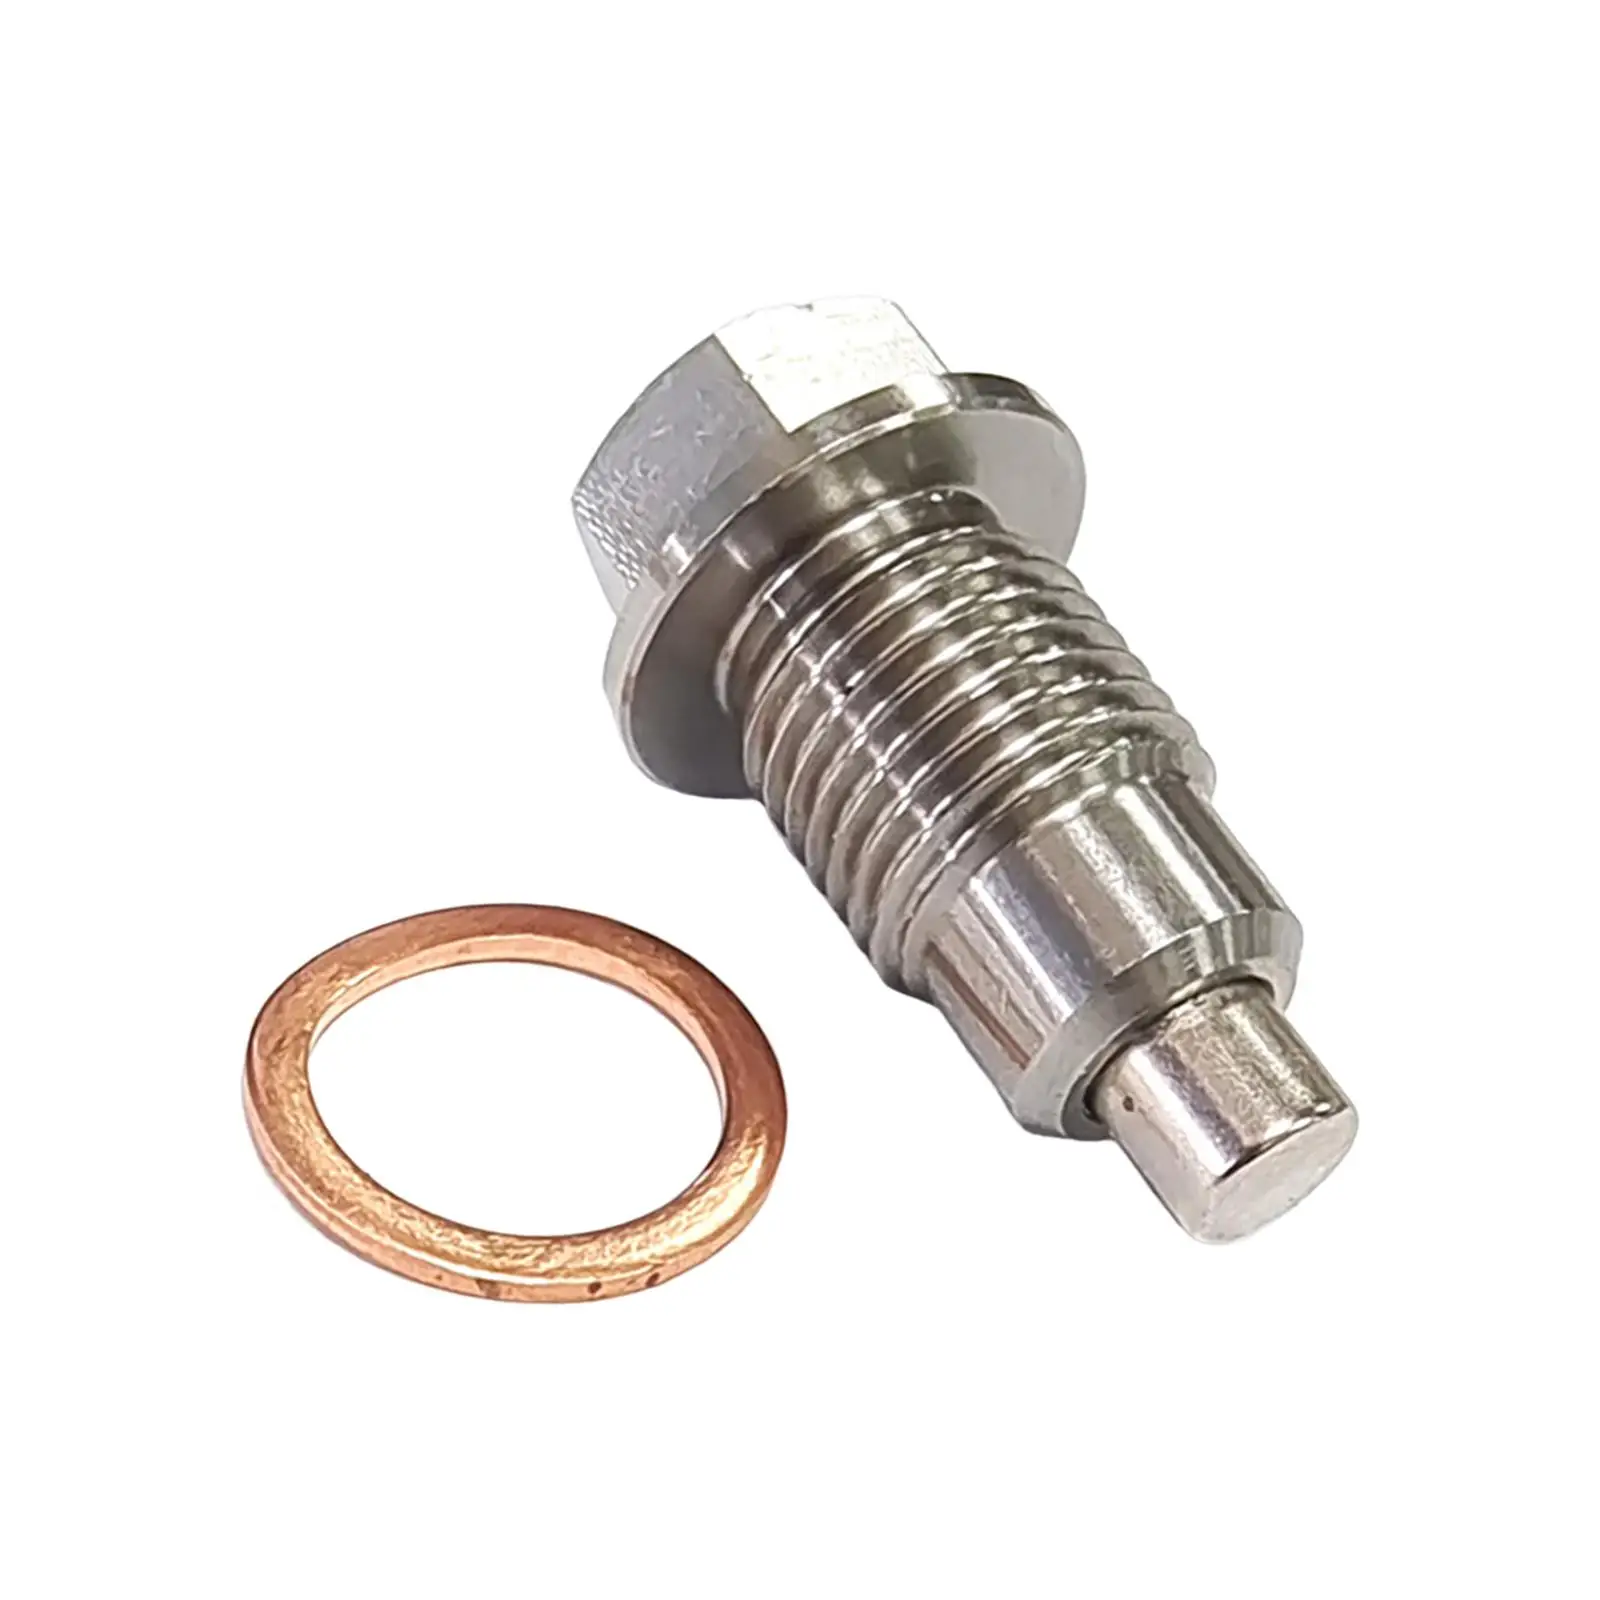 Oil Drain Plug M12x1.25 with Cooper Washer Heavy Duty Neodymium Magnet Bolt